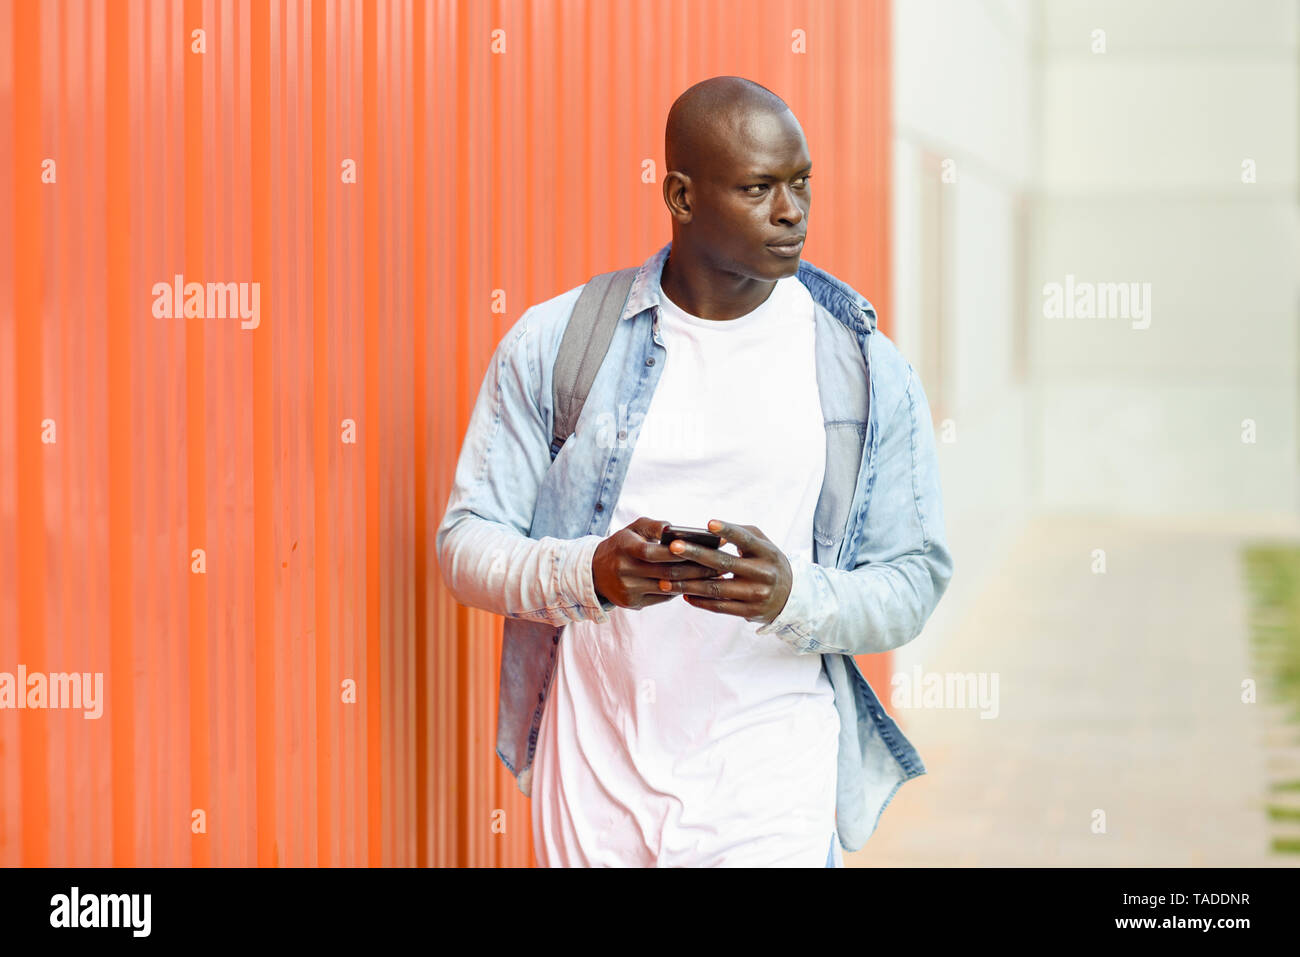 Man with smartphone wearing casual denim shirt Stock Photo